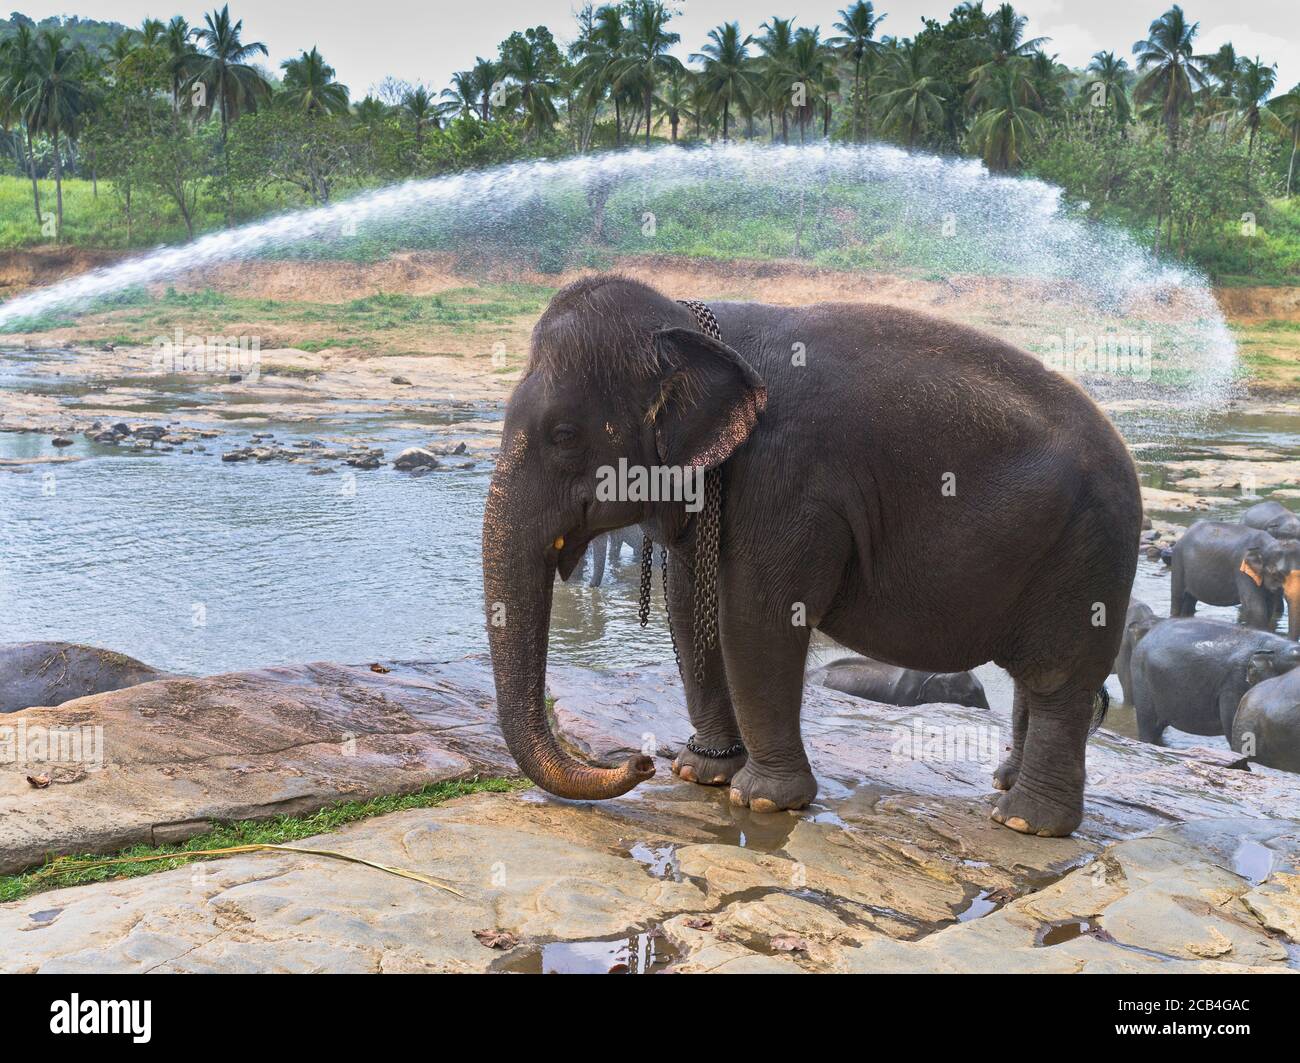 dh Elephas maximus maximus PINNAWALA SRI LANKA Bathing time wash spraying water elephants spray orphanage elephant view side Stock Photo